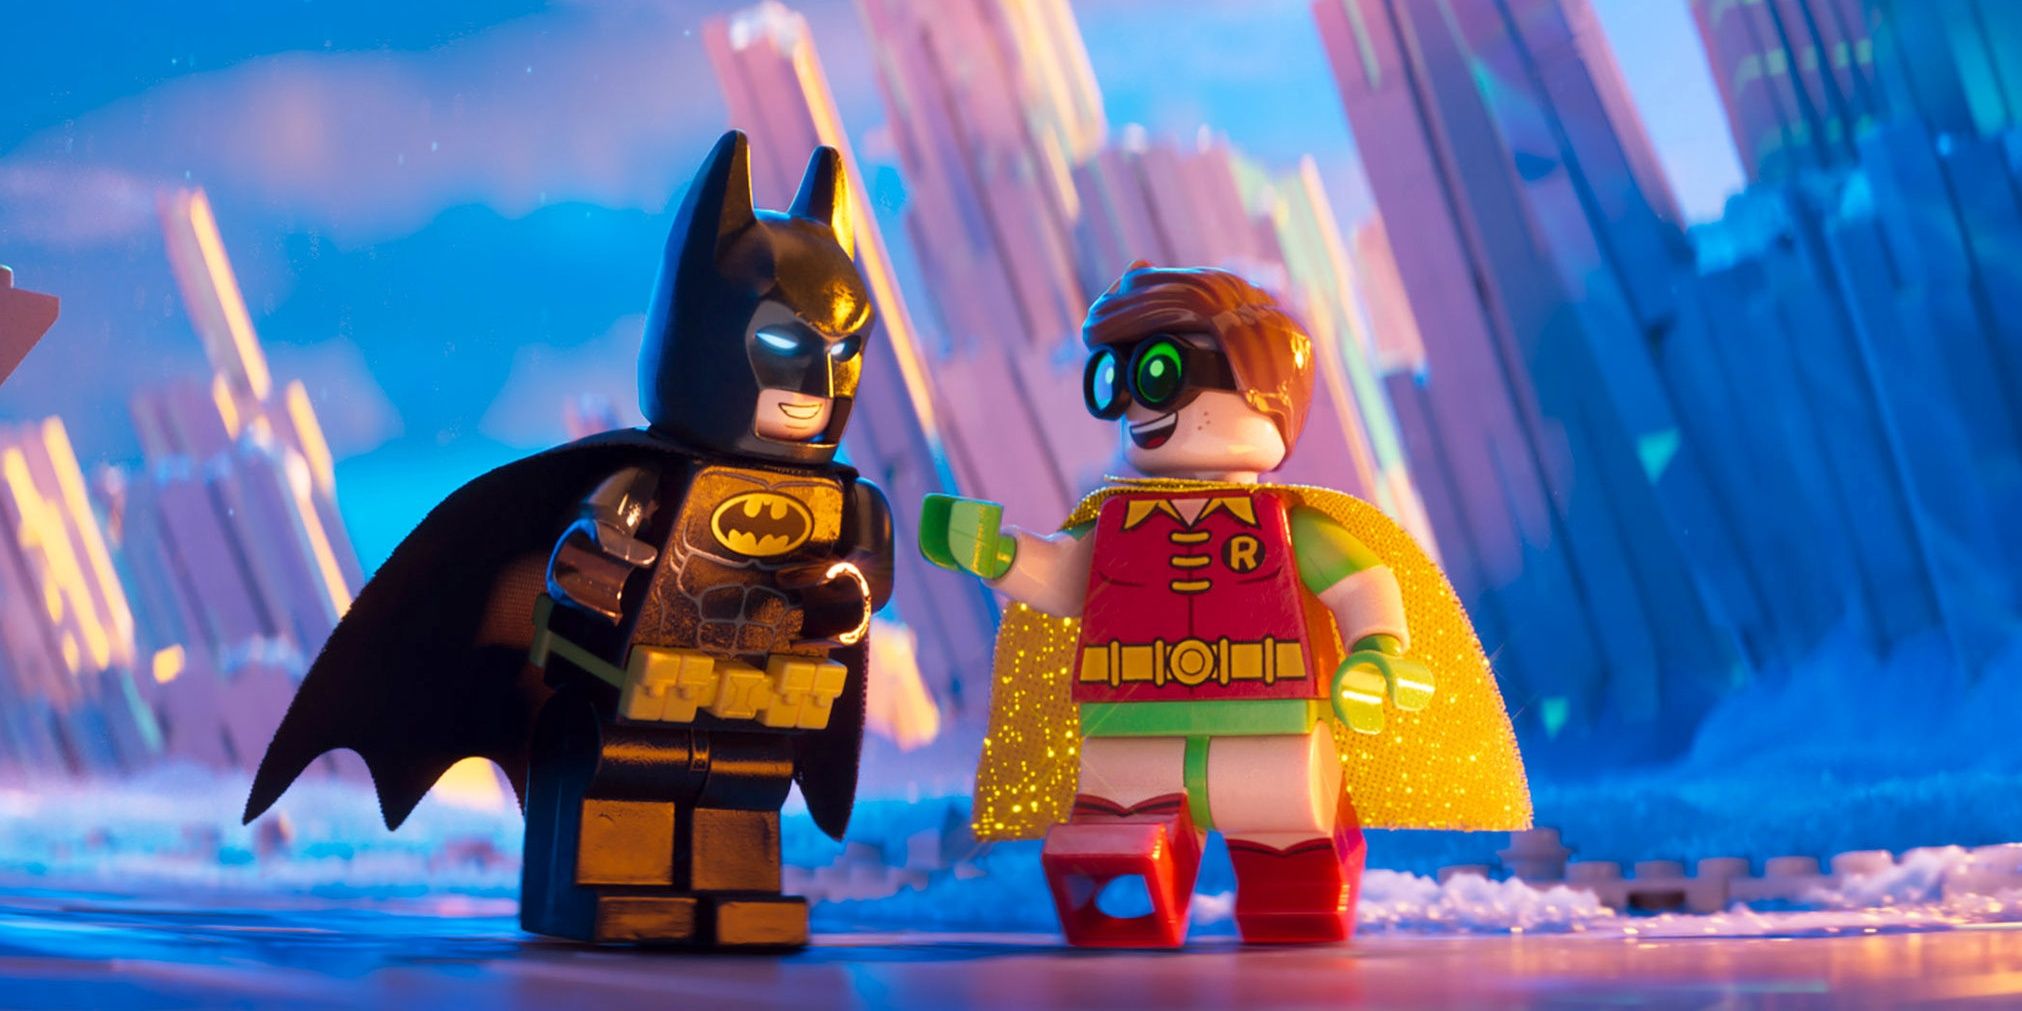 Batman and Robin talking in The Lego Batman Movie Cropped